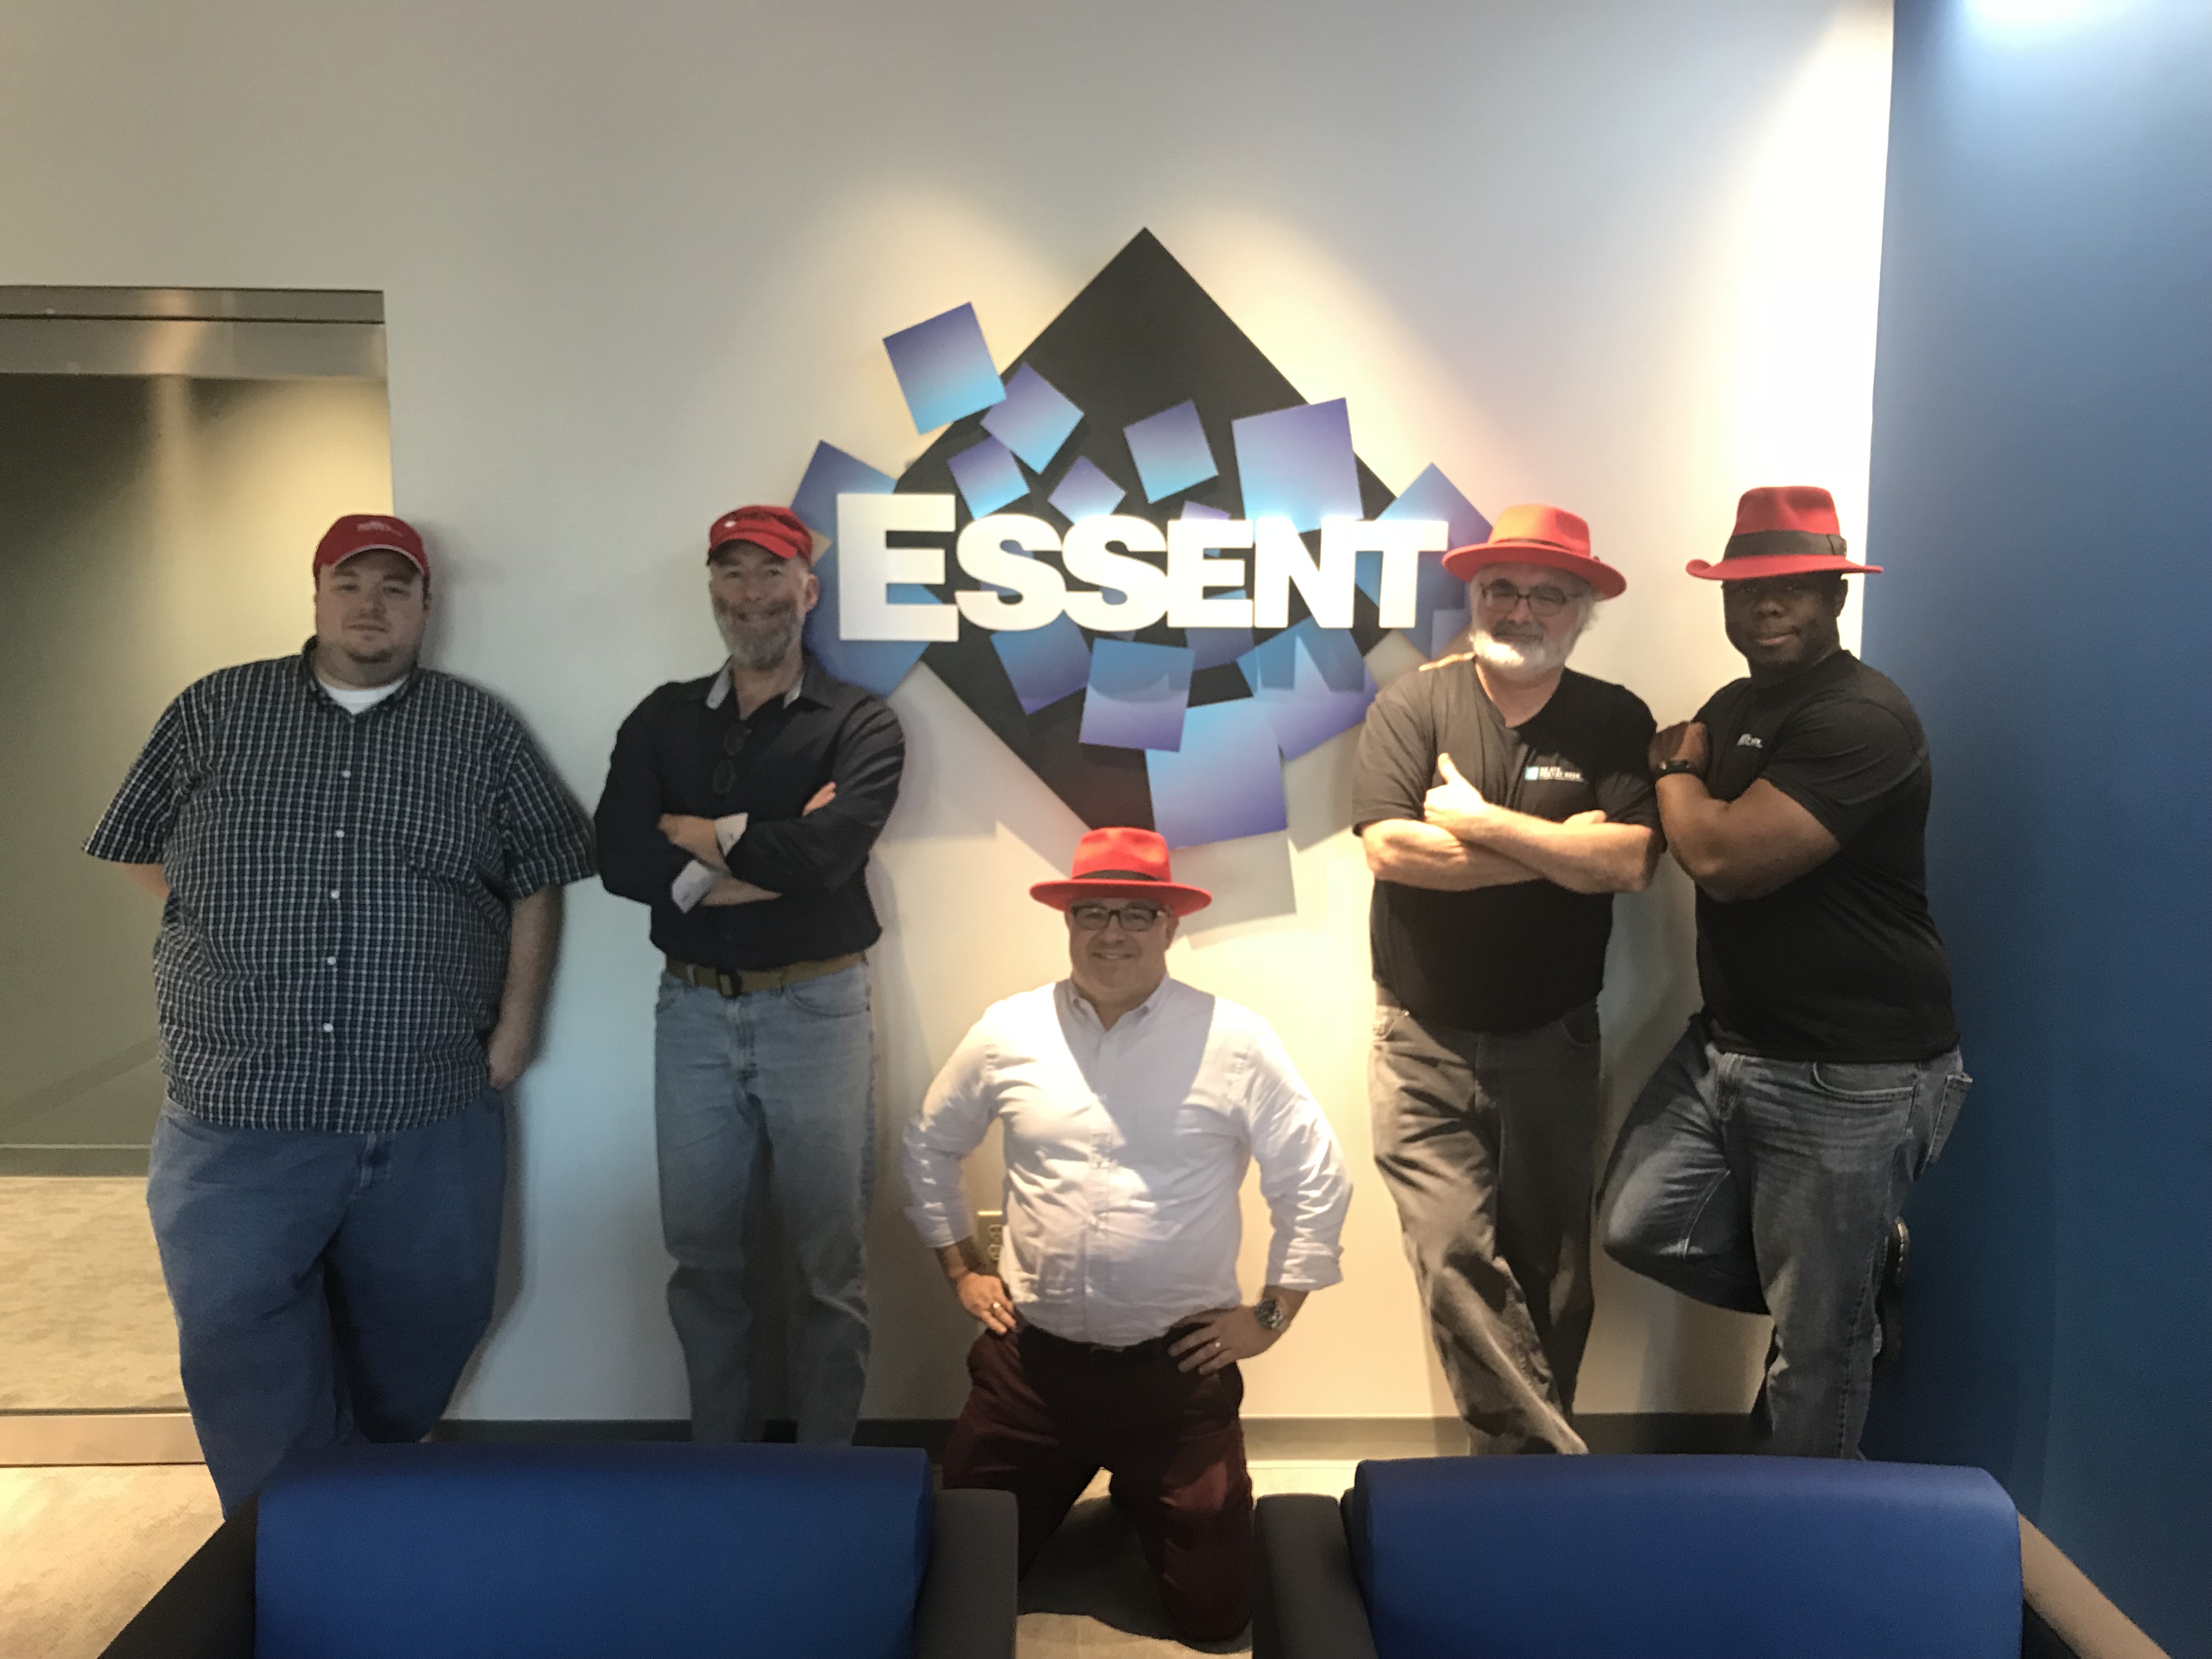 Red Hat Visits Essent